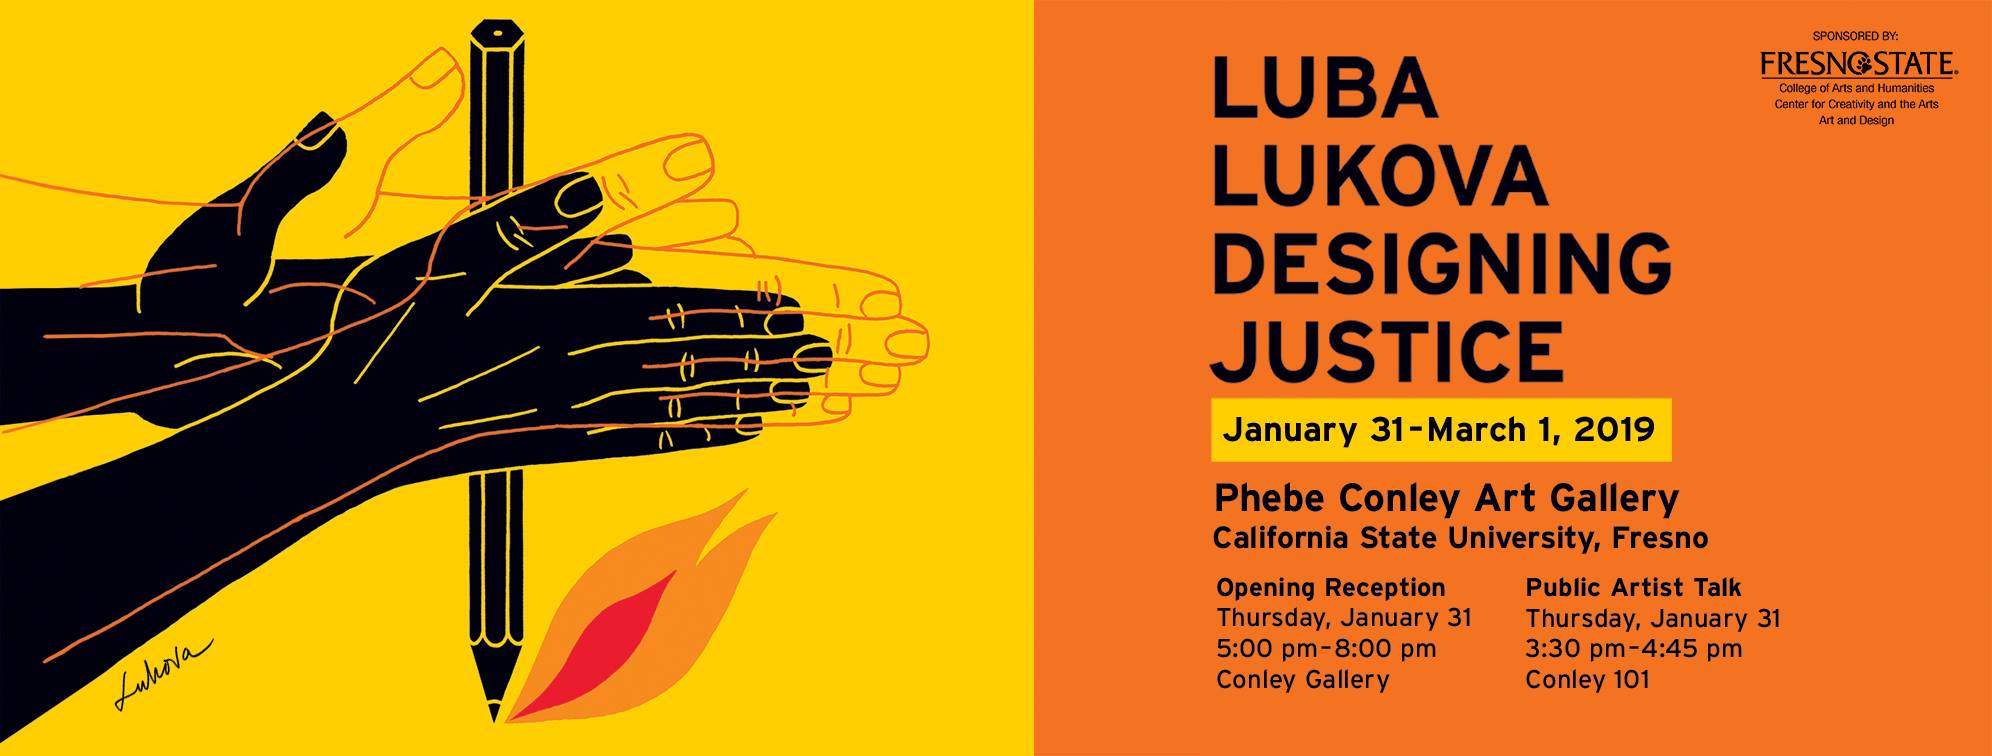 Luba Lukava Designing Justice